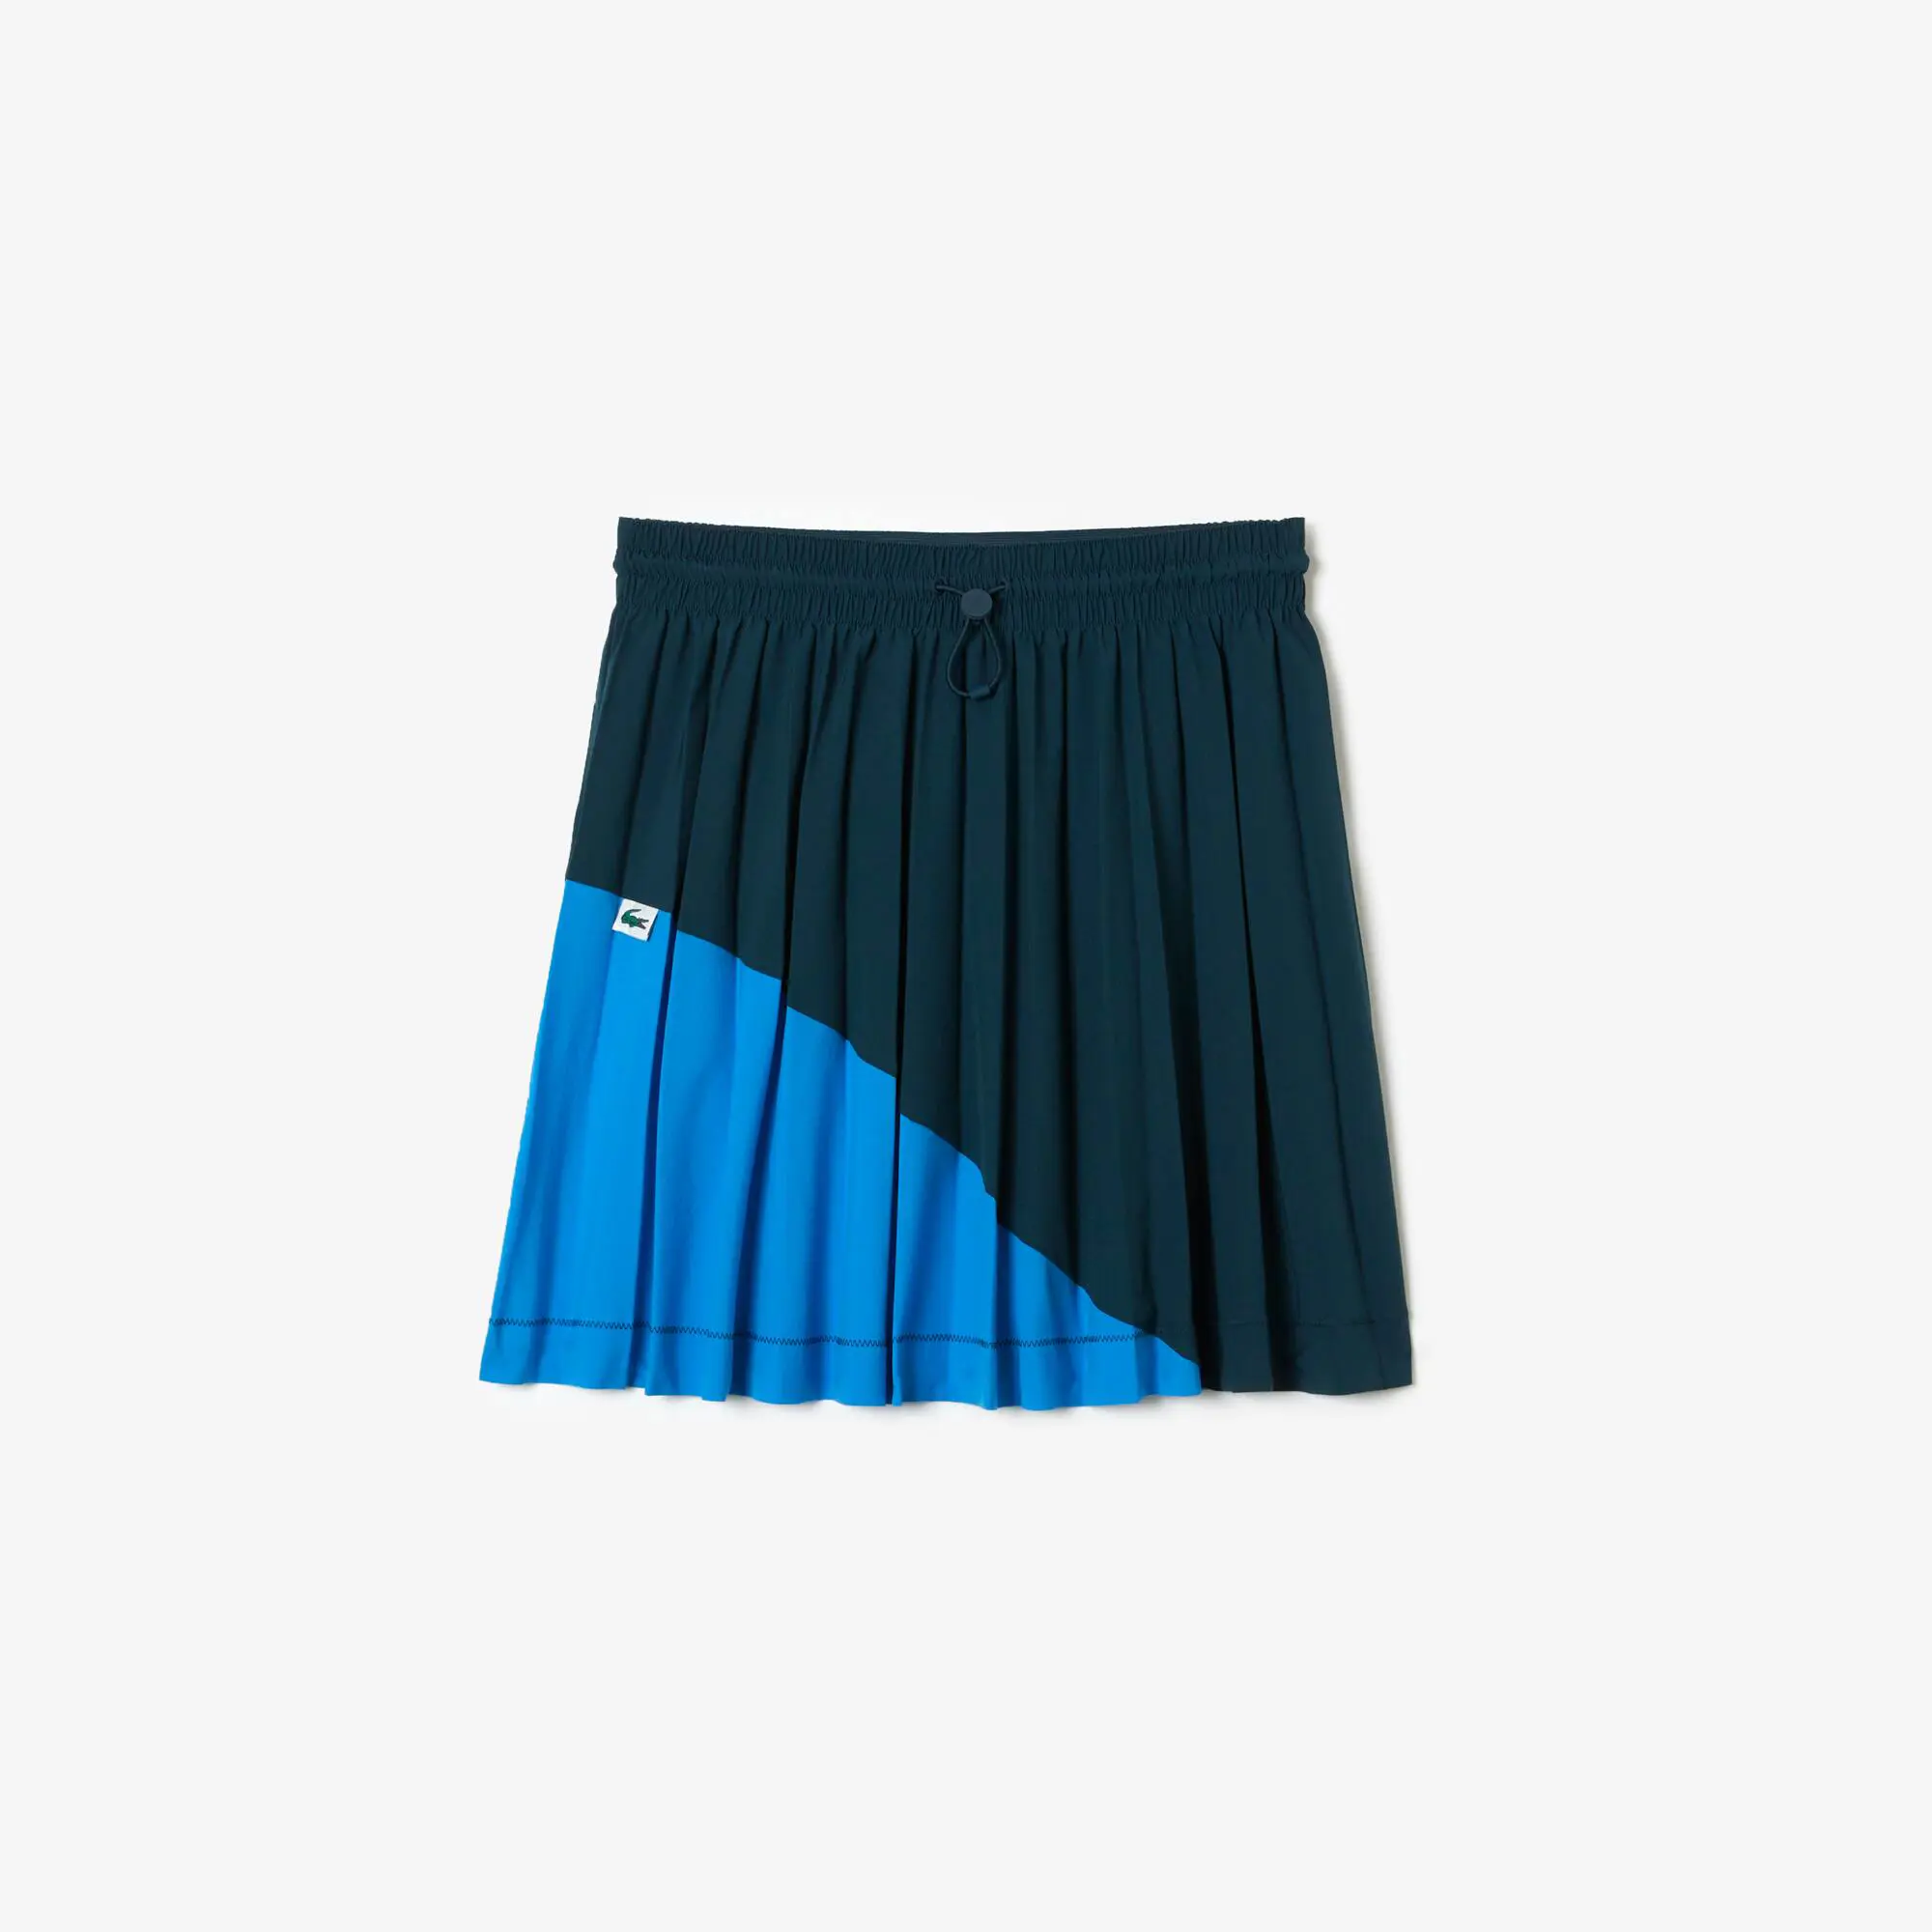 Lacoste Women's Colorblock Pleated Skirt. 2